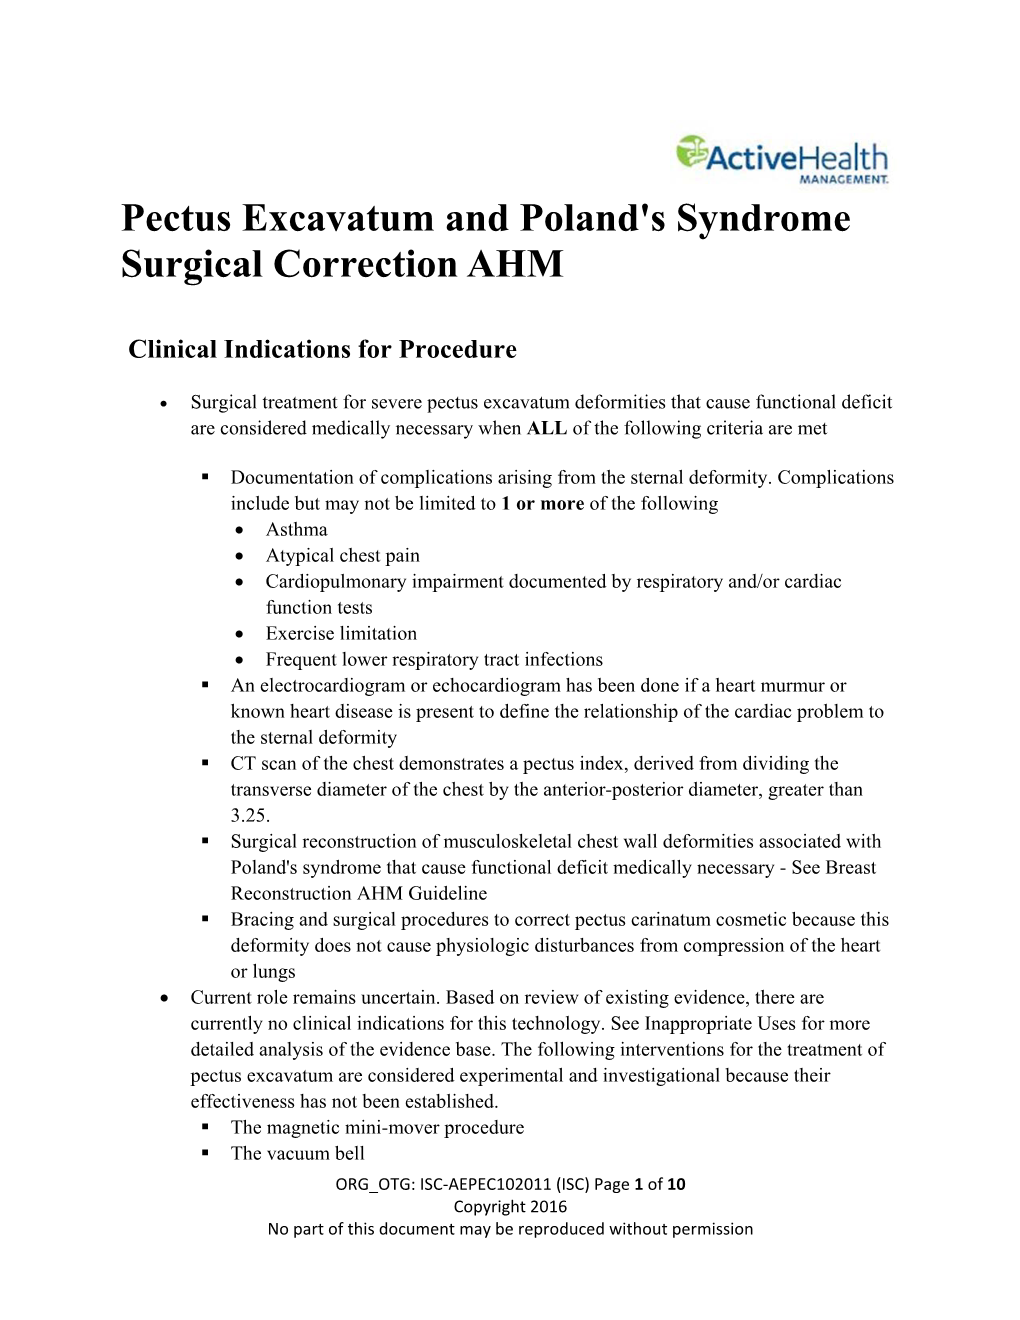 Pectus Excavatum and Poland's Syndrome Surgical Correction AHM